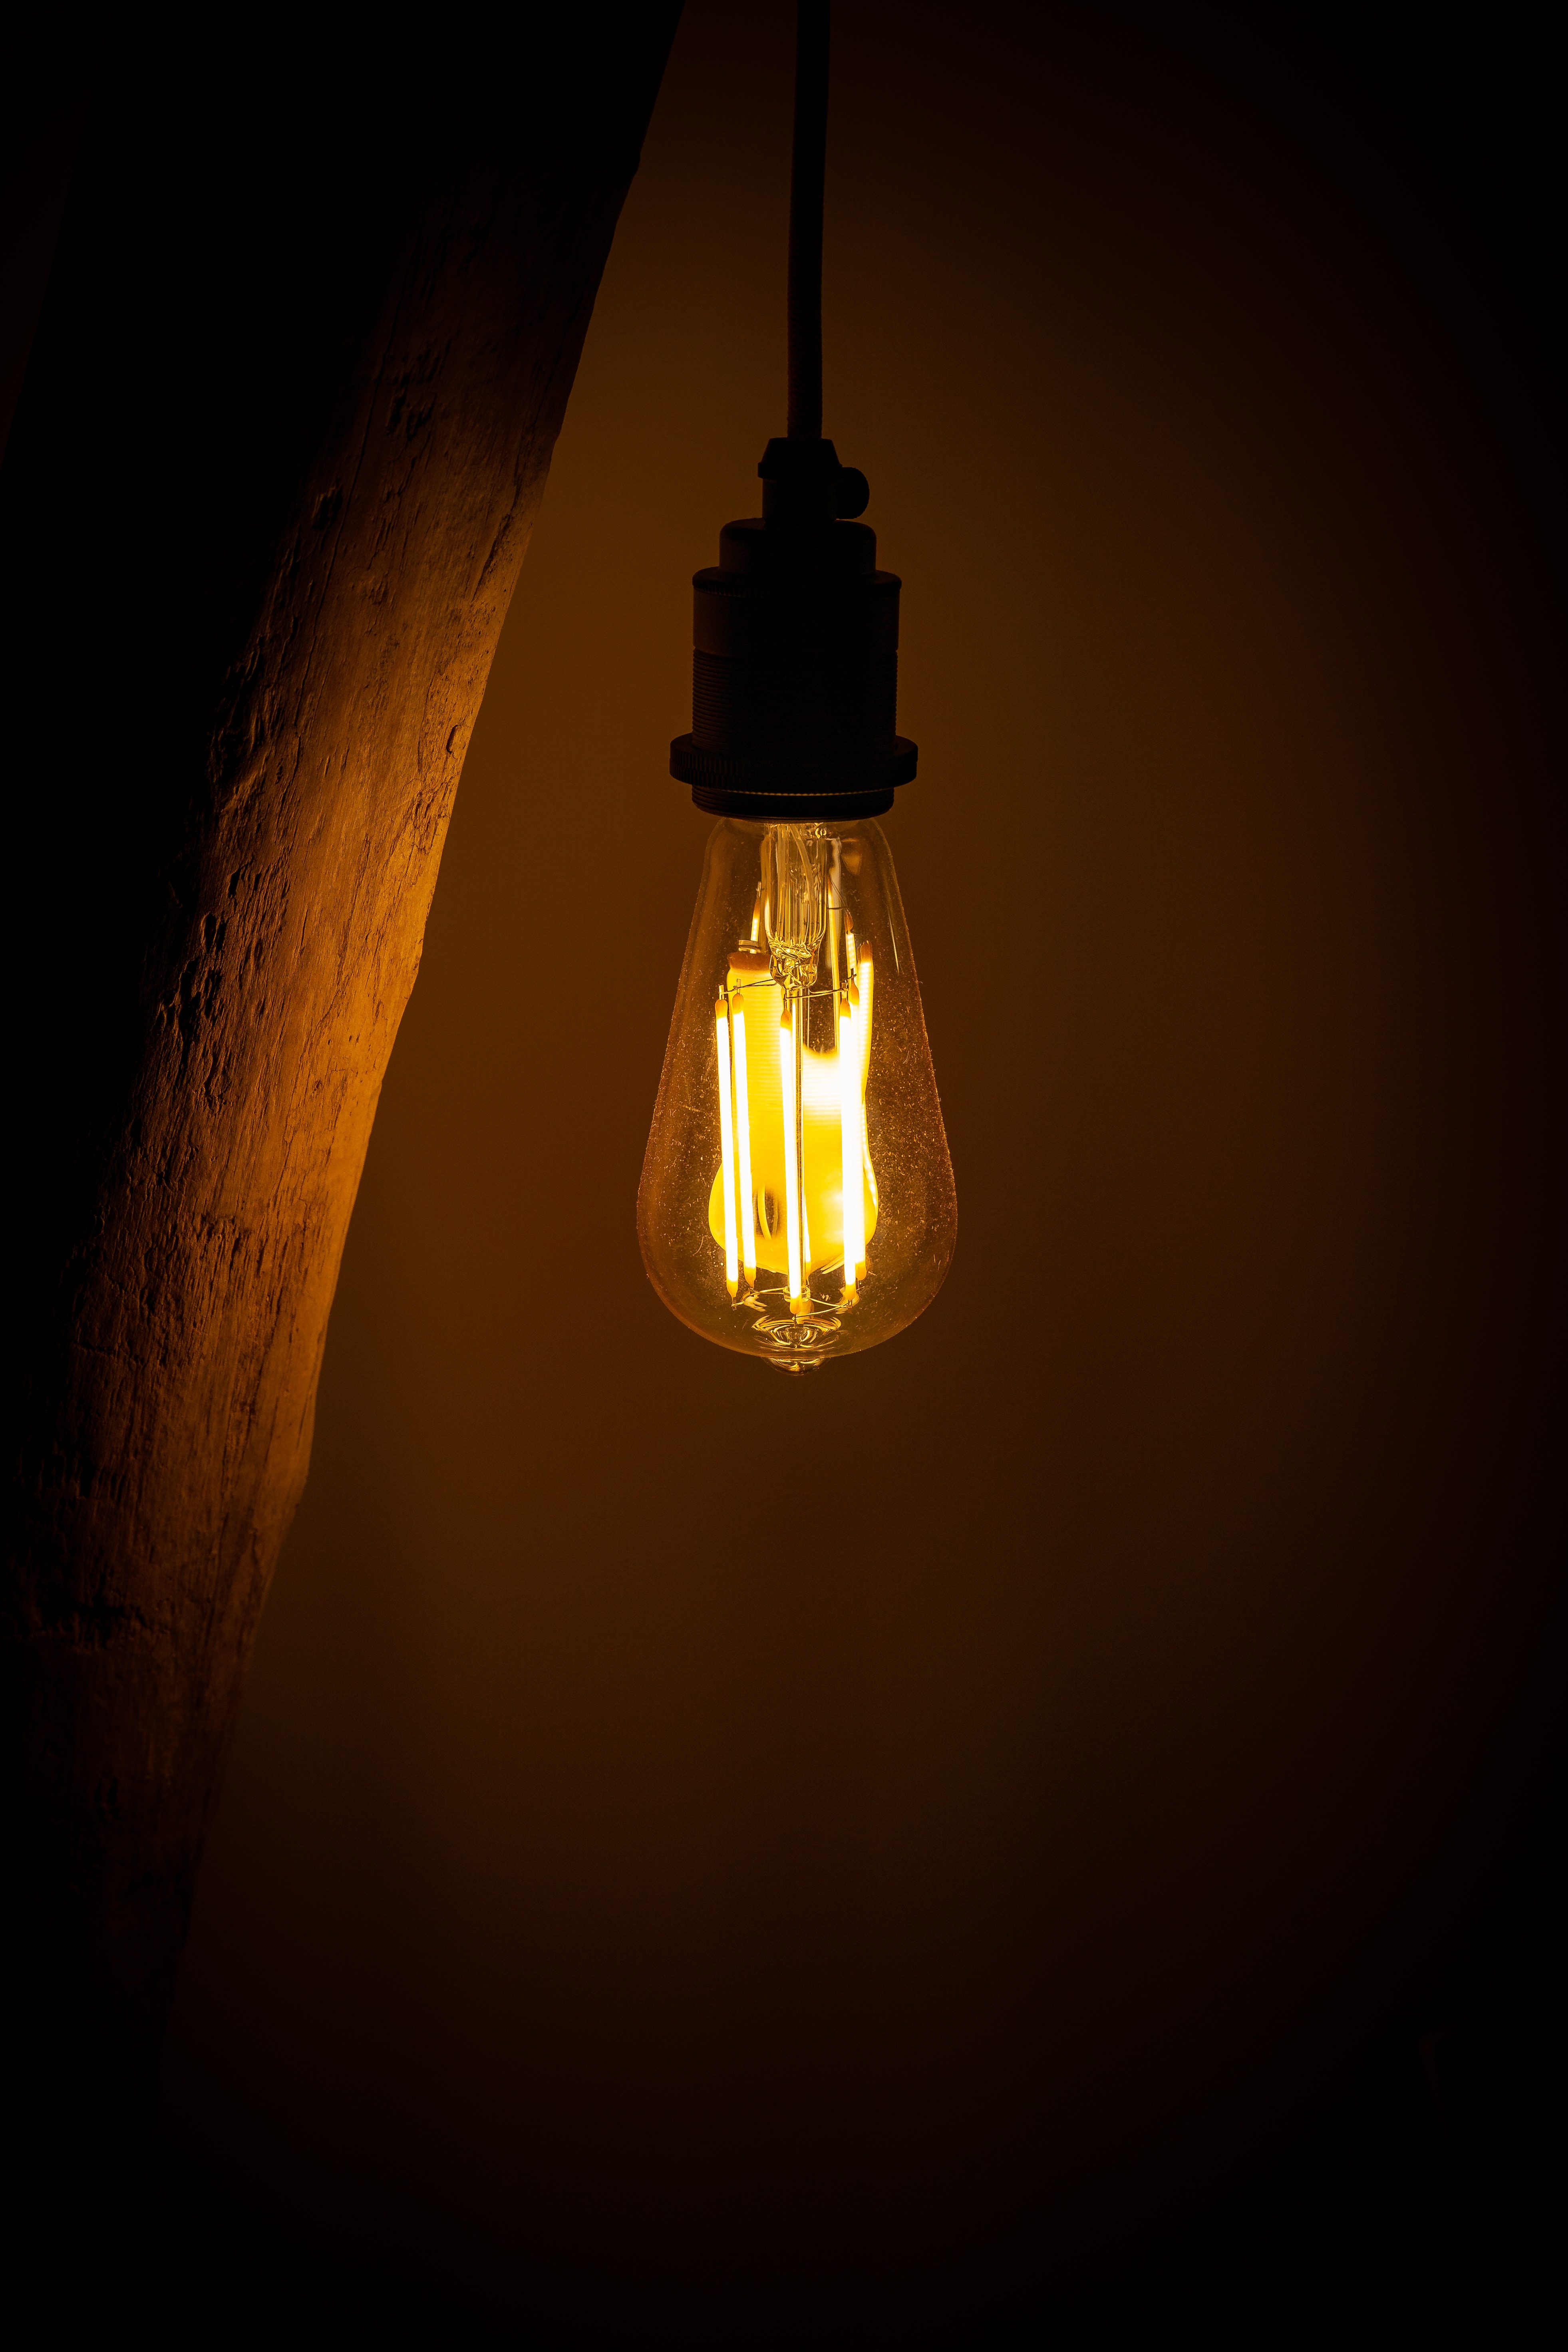 lamp, dark, lighting, electricity, illumination, light bulb